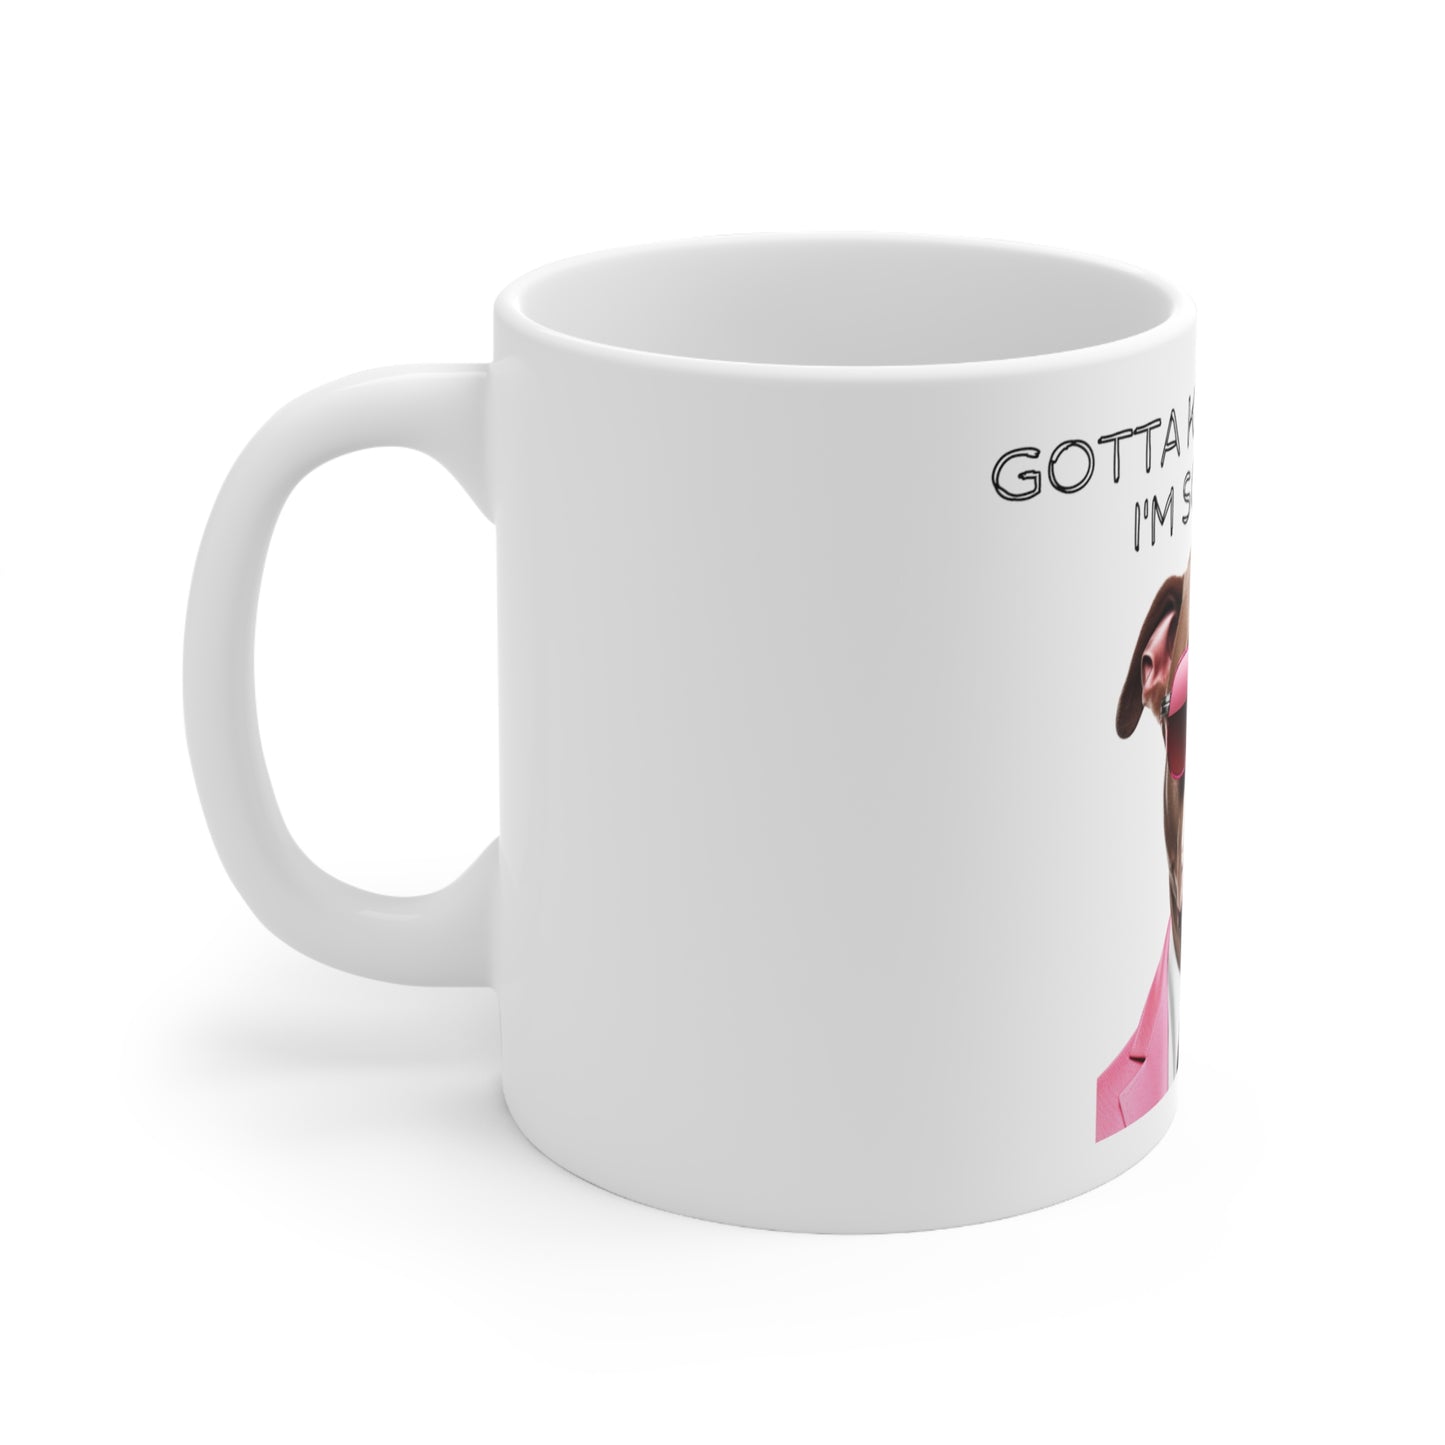 "Gotta Kiss Myself I'm So Pitty" Ceramic Coffee Mug 11oz